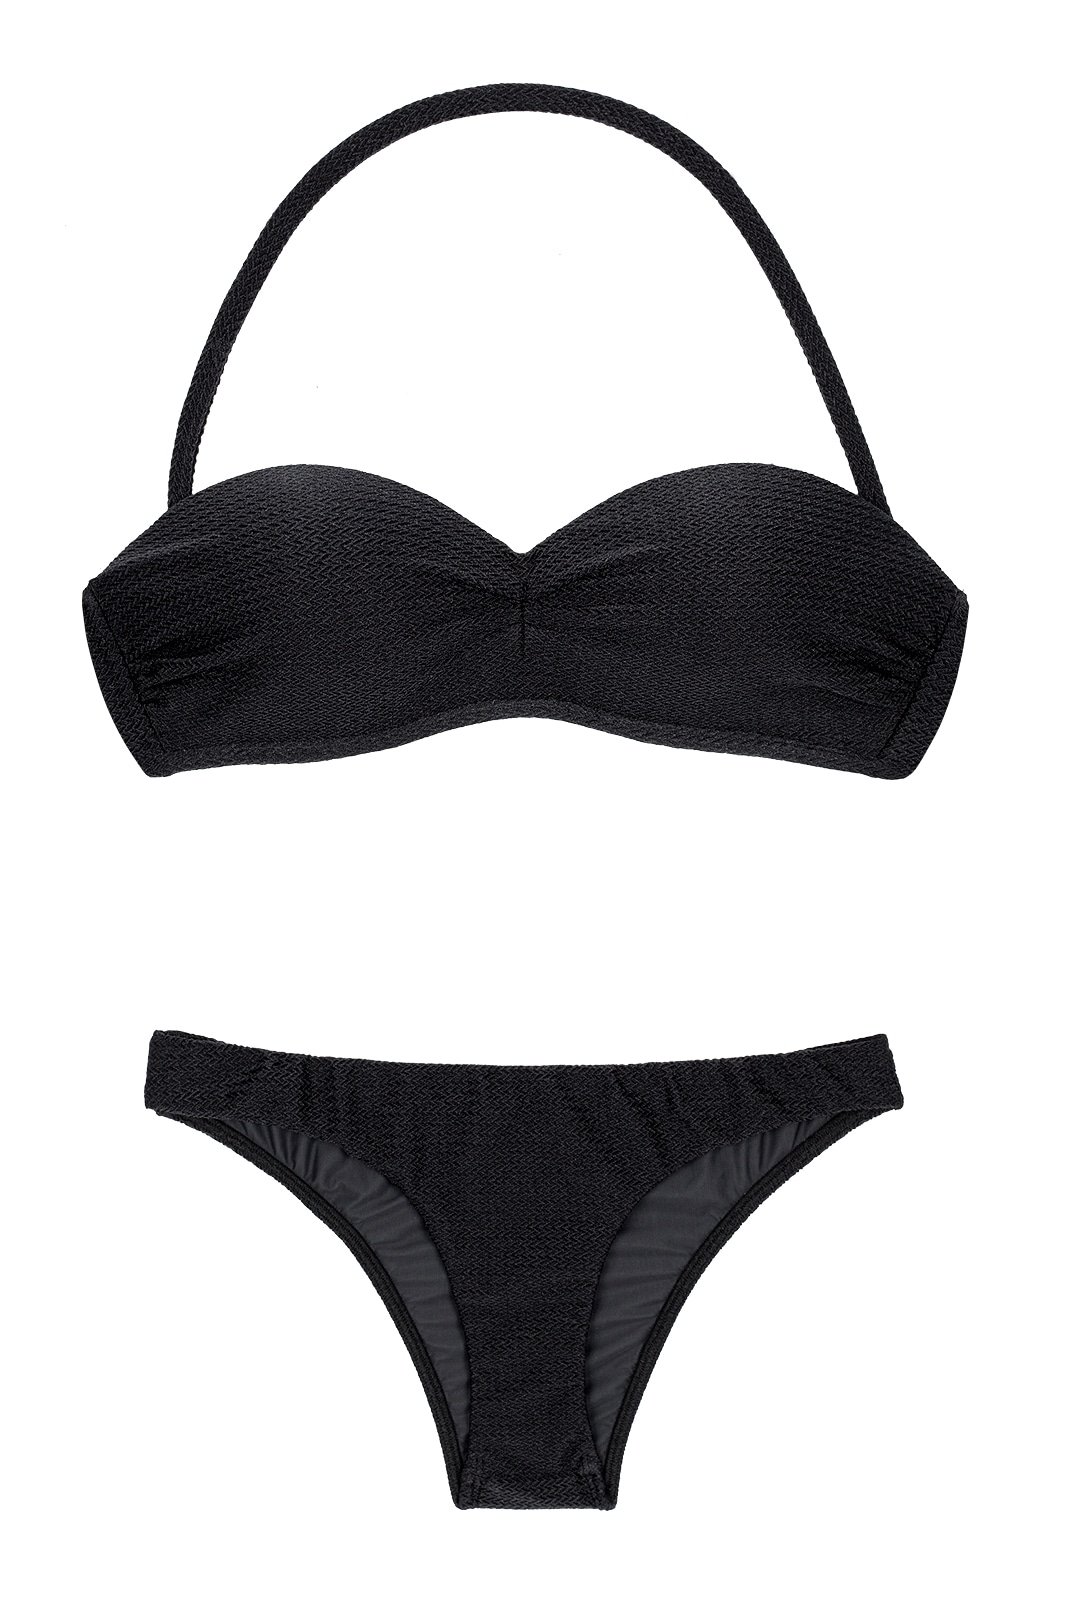 Black Textured Padded Bandeau Bikini - Duna Black Tomara Que Caia - Rio ...